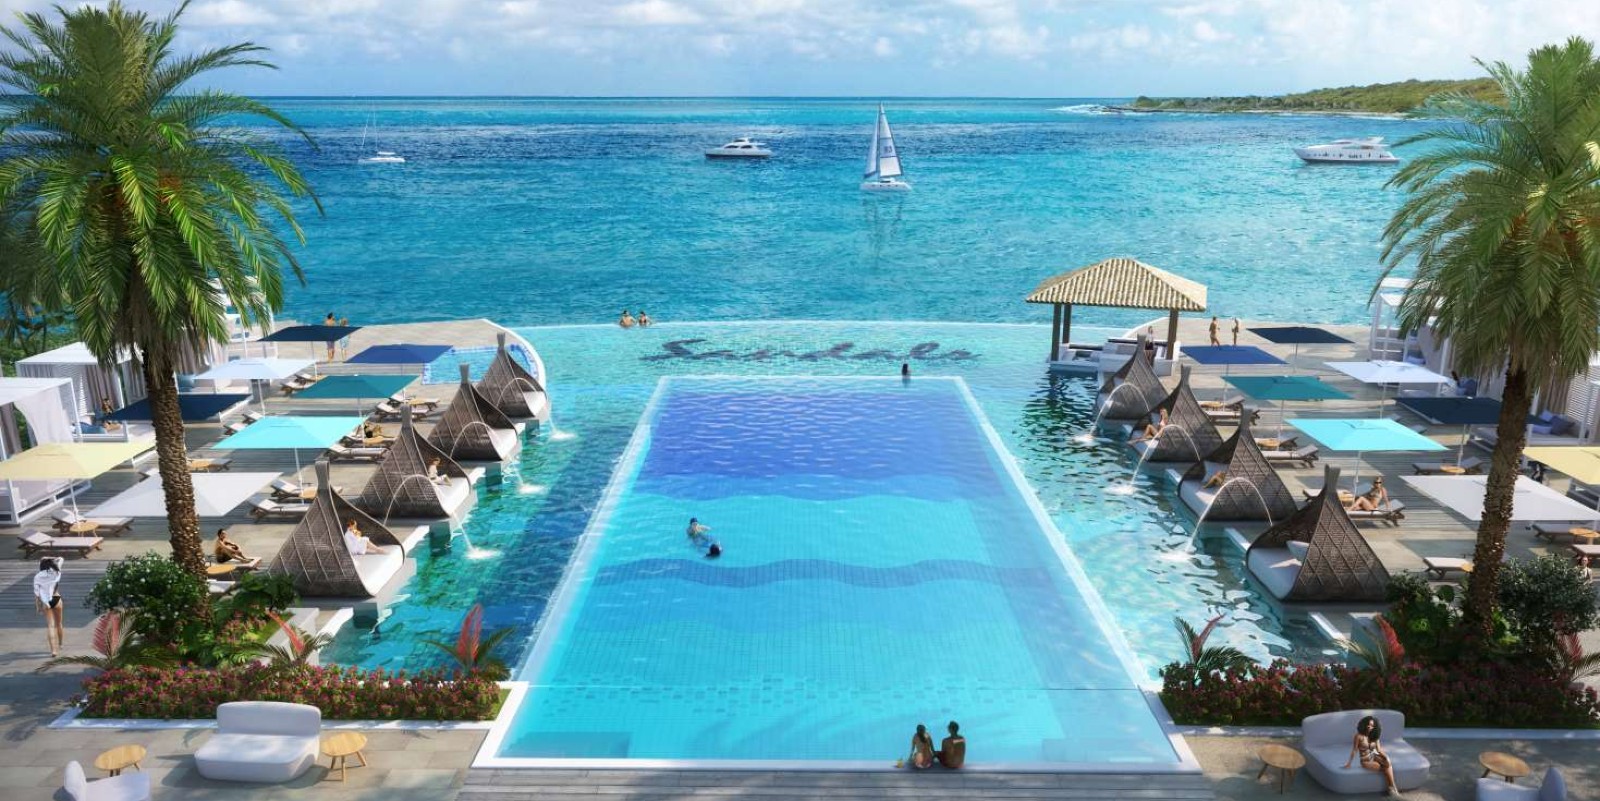 Travel blog: Inside Sandals Curacao: The Five-Star Island Resort